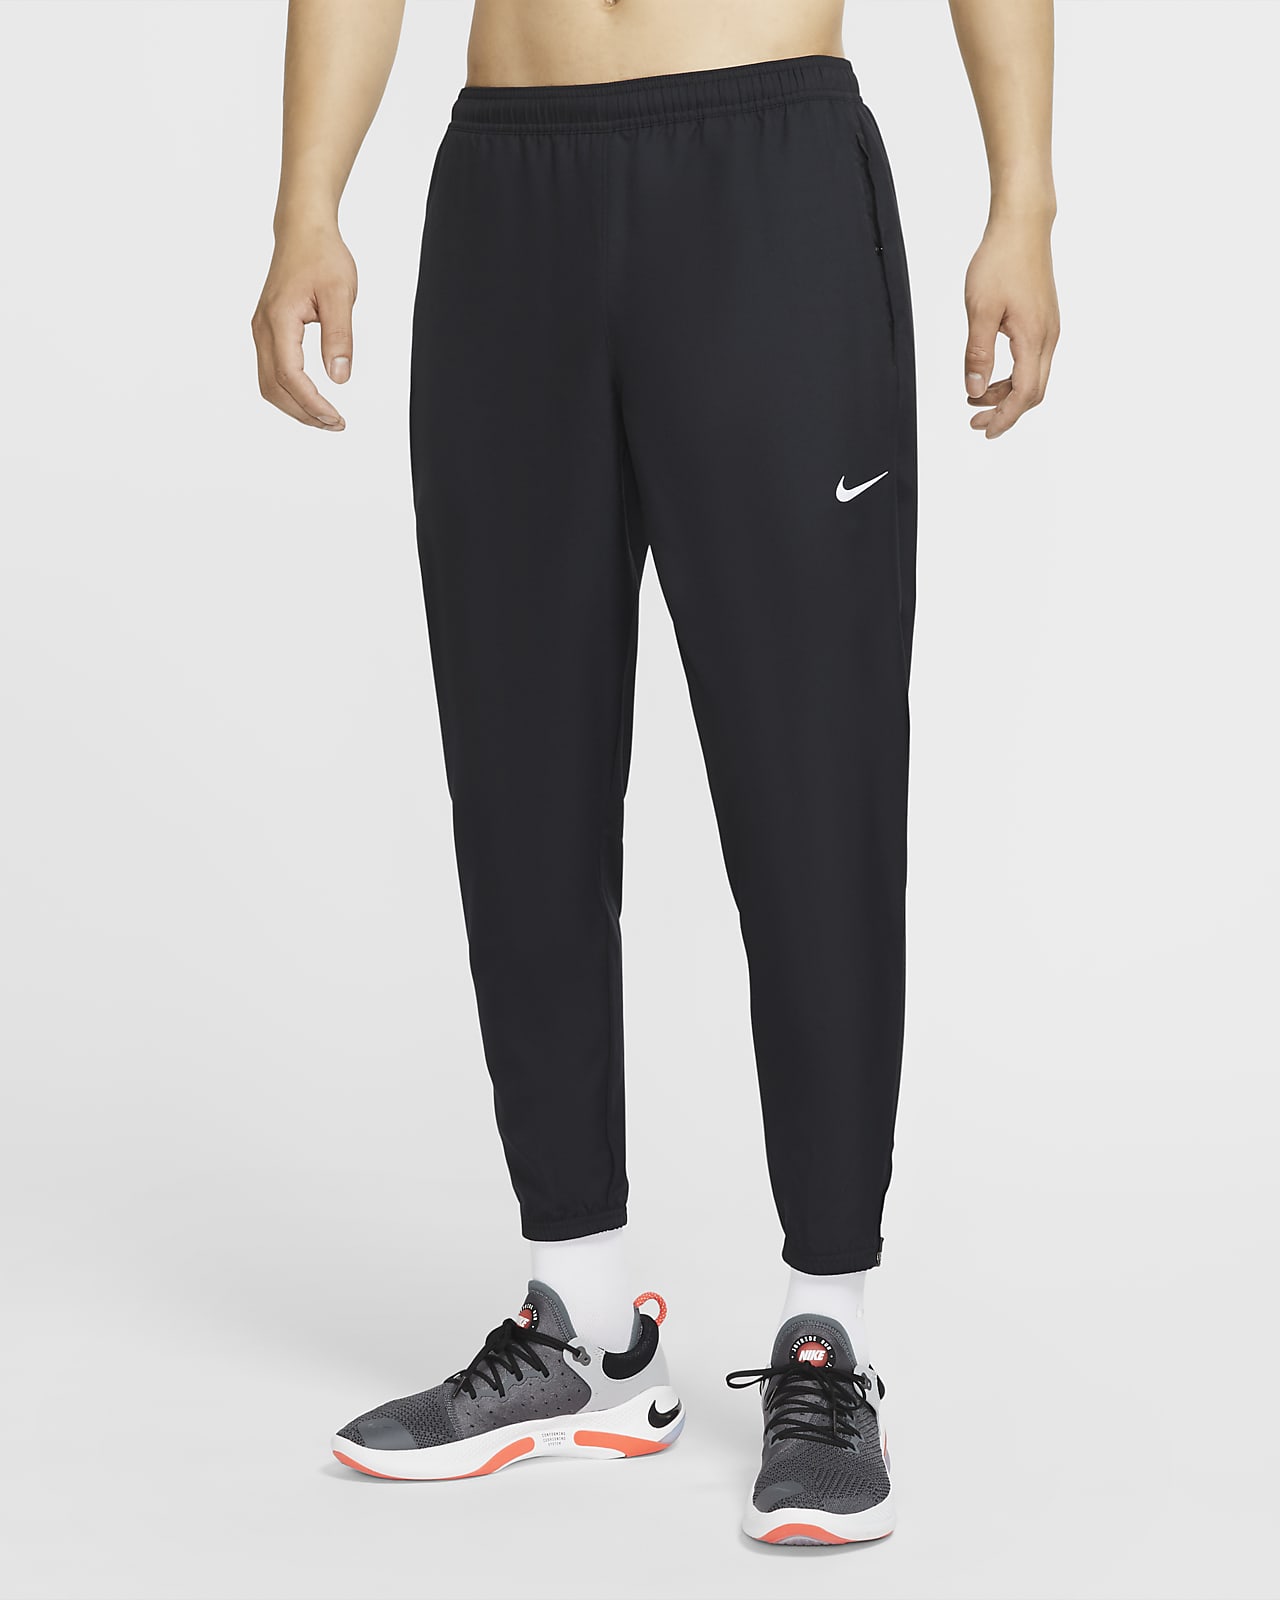 Nike公式 ナイキ エッセンシャル メンズ ウーブン ランニングパンツ オンラインストア 通販サイト